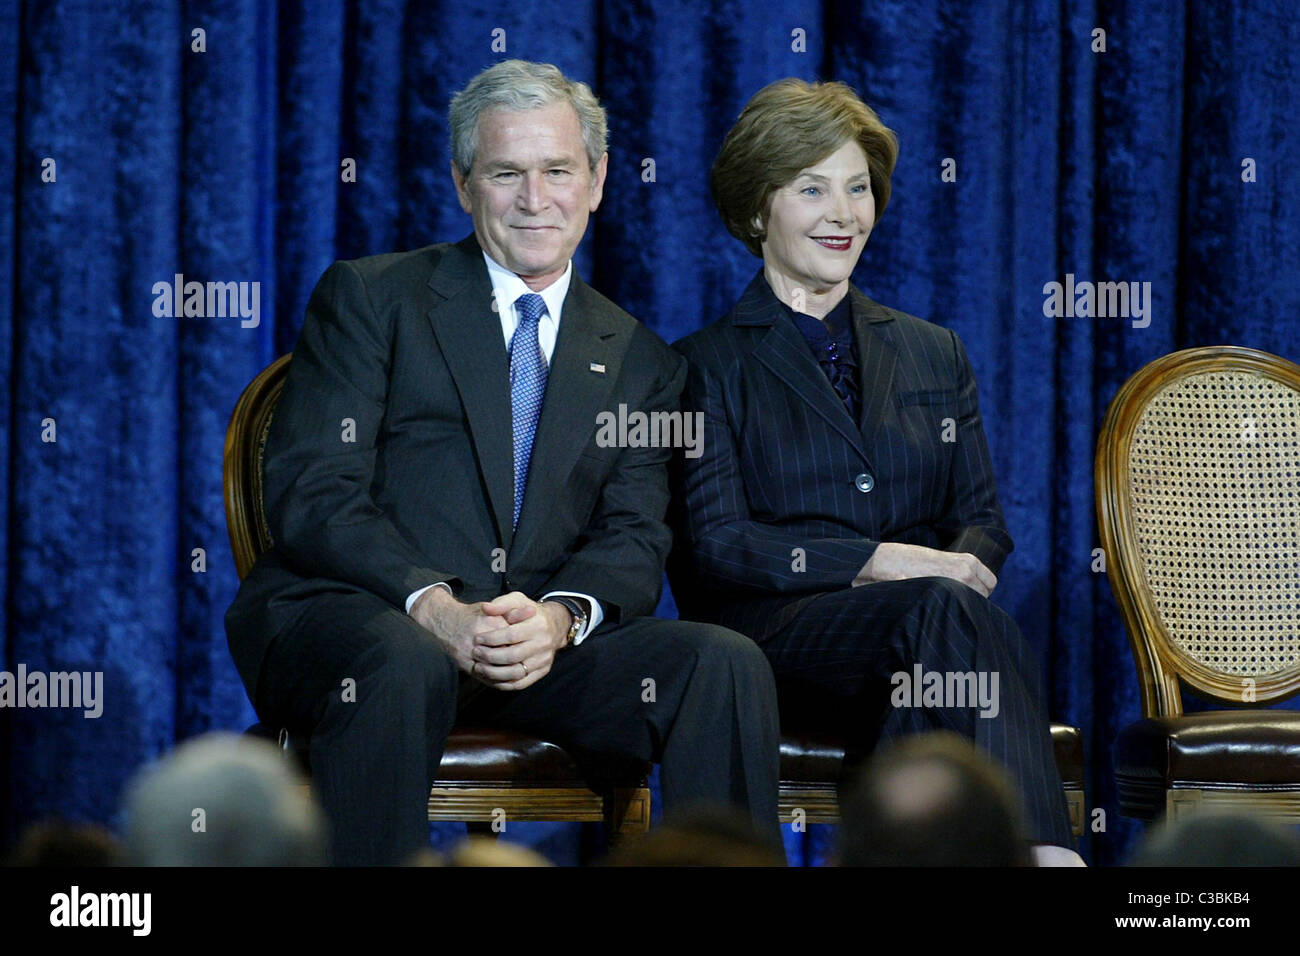 George W Bush Presidential Candidate Pin 2000 First Lady Laura Bush 